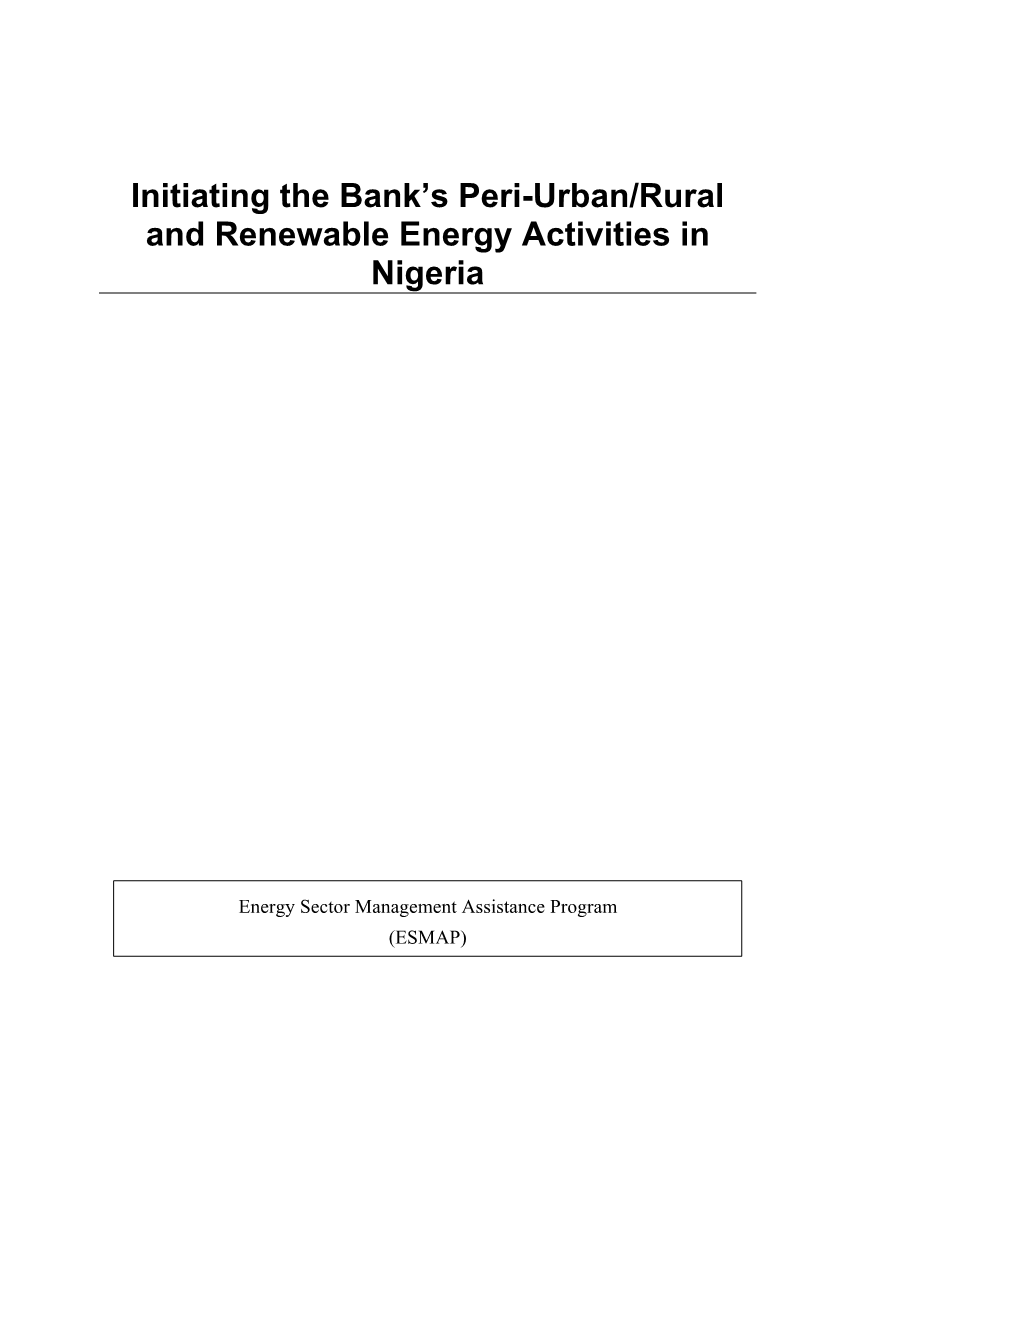 Initiating the Bank's Peri-Urban/Rural and Renewable Energy Activities In